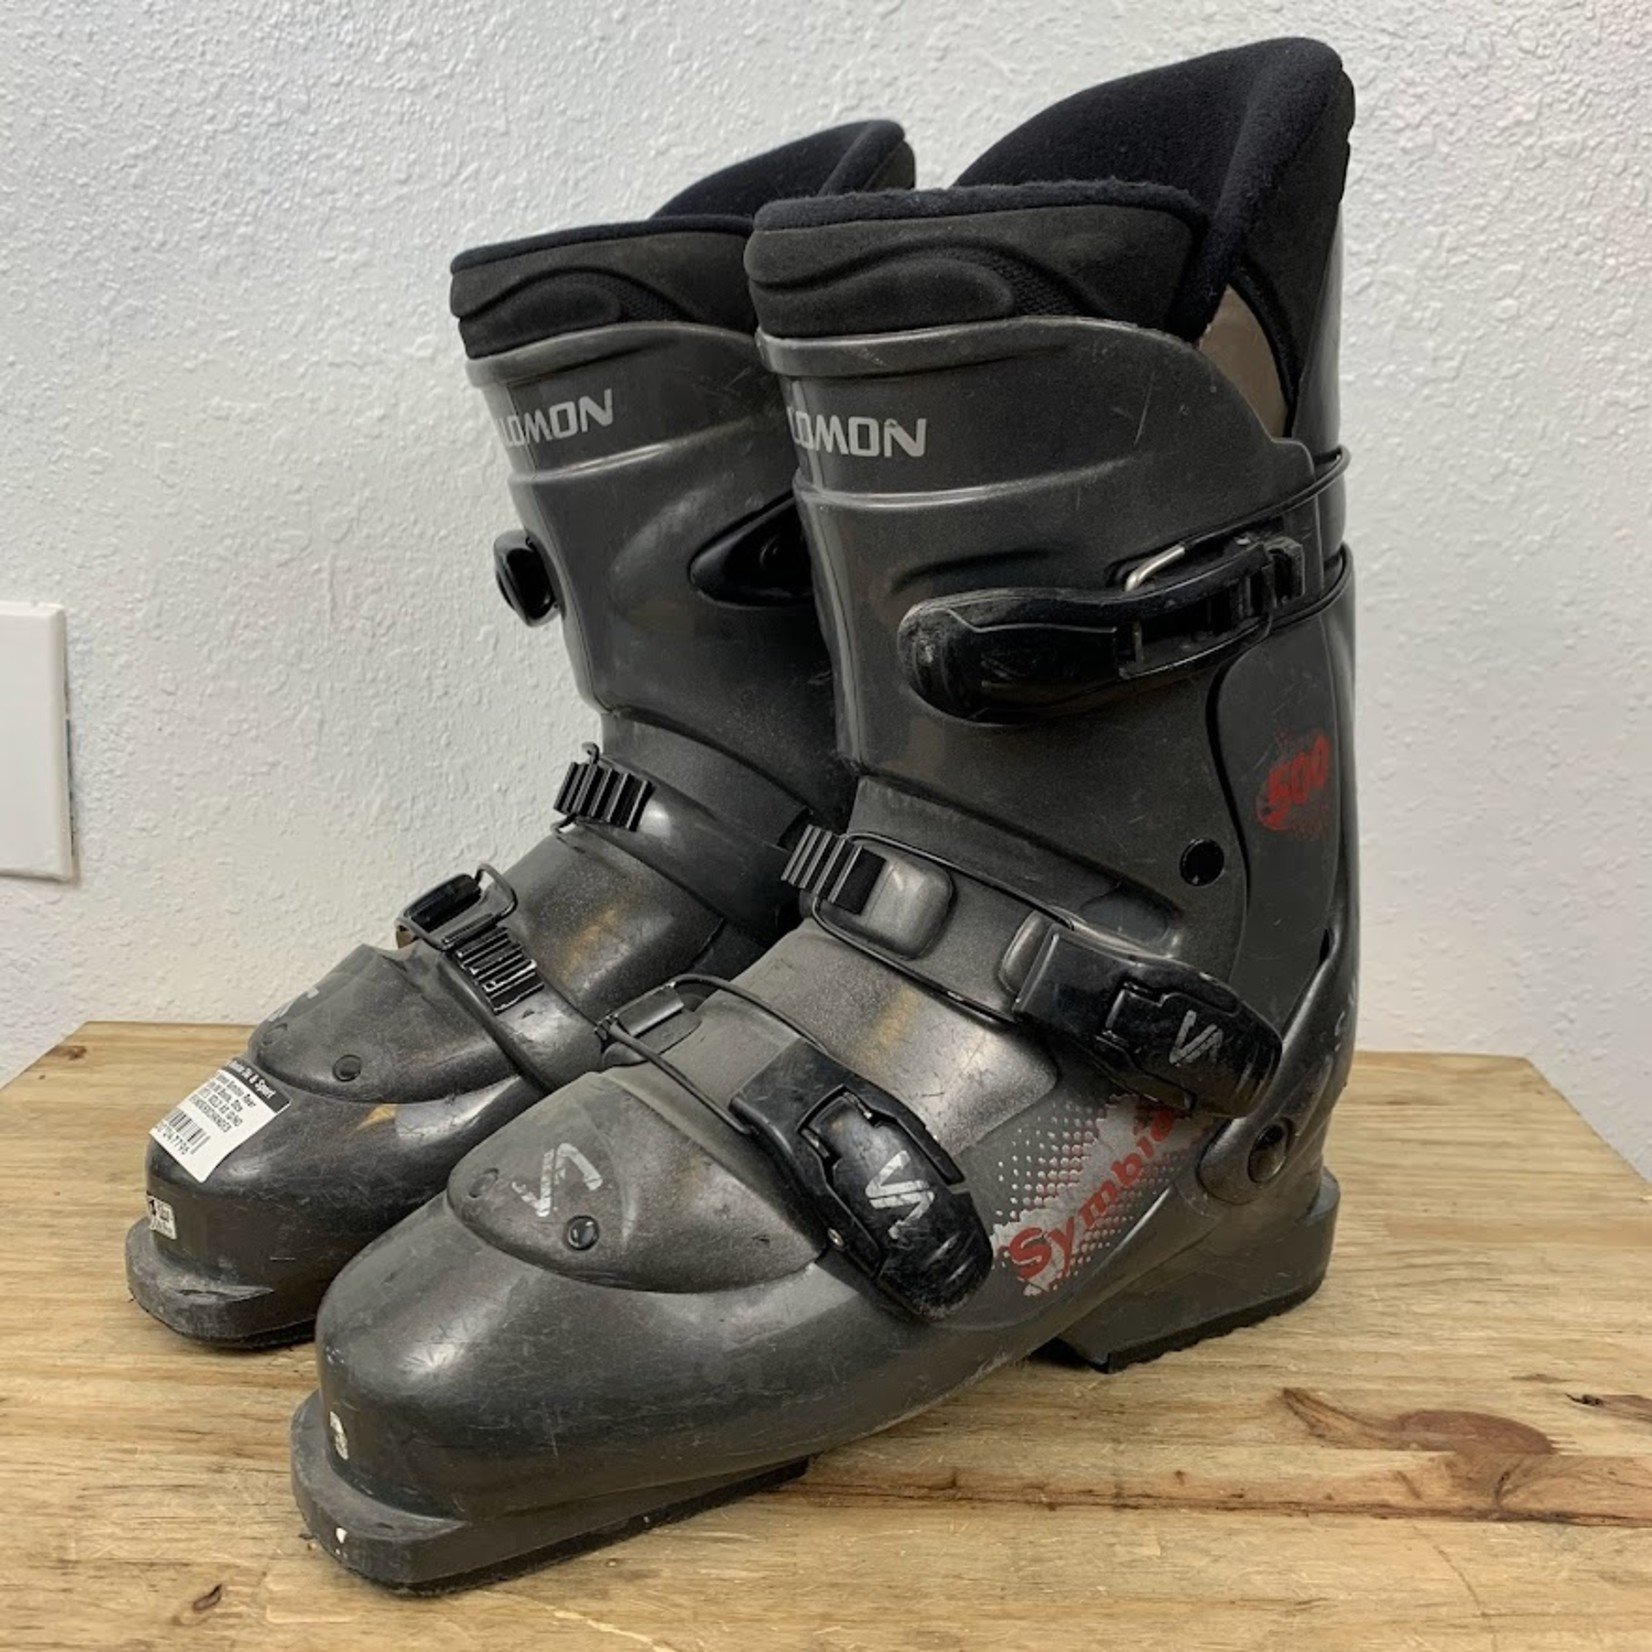 Salomon Salomon Symbio Rear Entry Ski Boots, Size 26/26.5 SOLD AS IS/NO REFUNDS/EXCHANGES